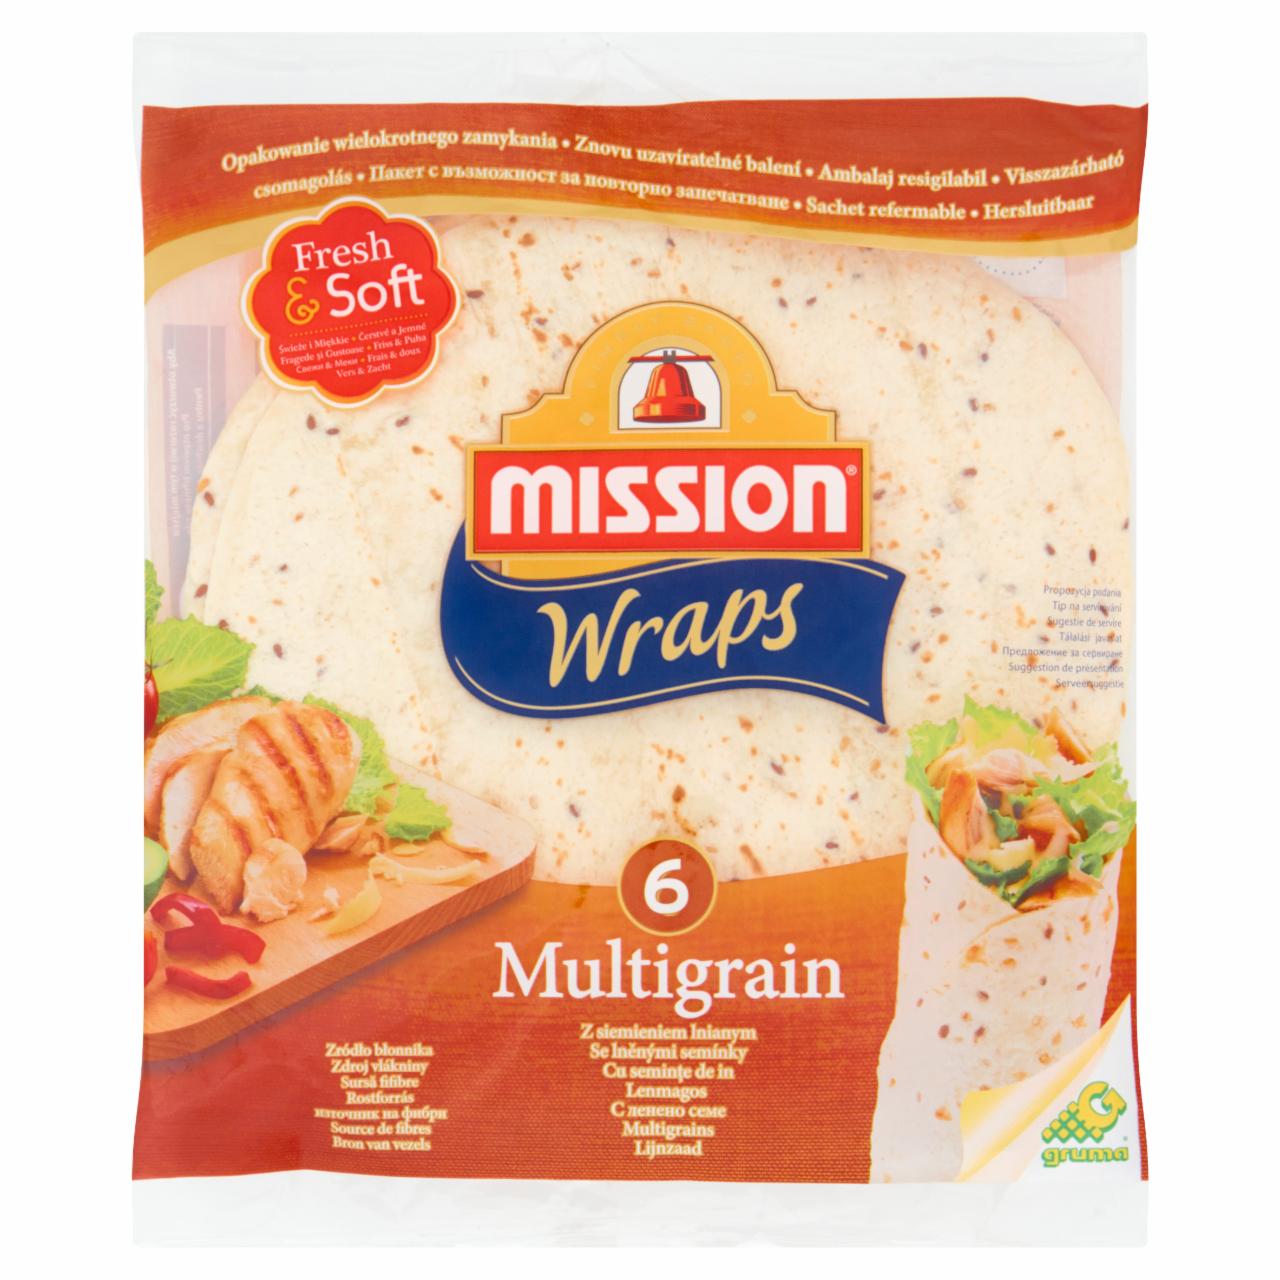 Fotografie - Wraps multigrain wheat flour tortilla with linseed Mission (tortilla pšeničná se lněným semenem) Mission